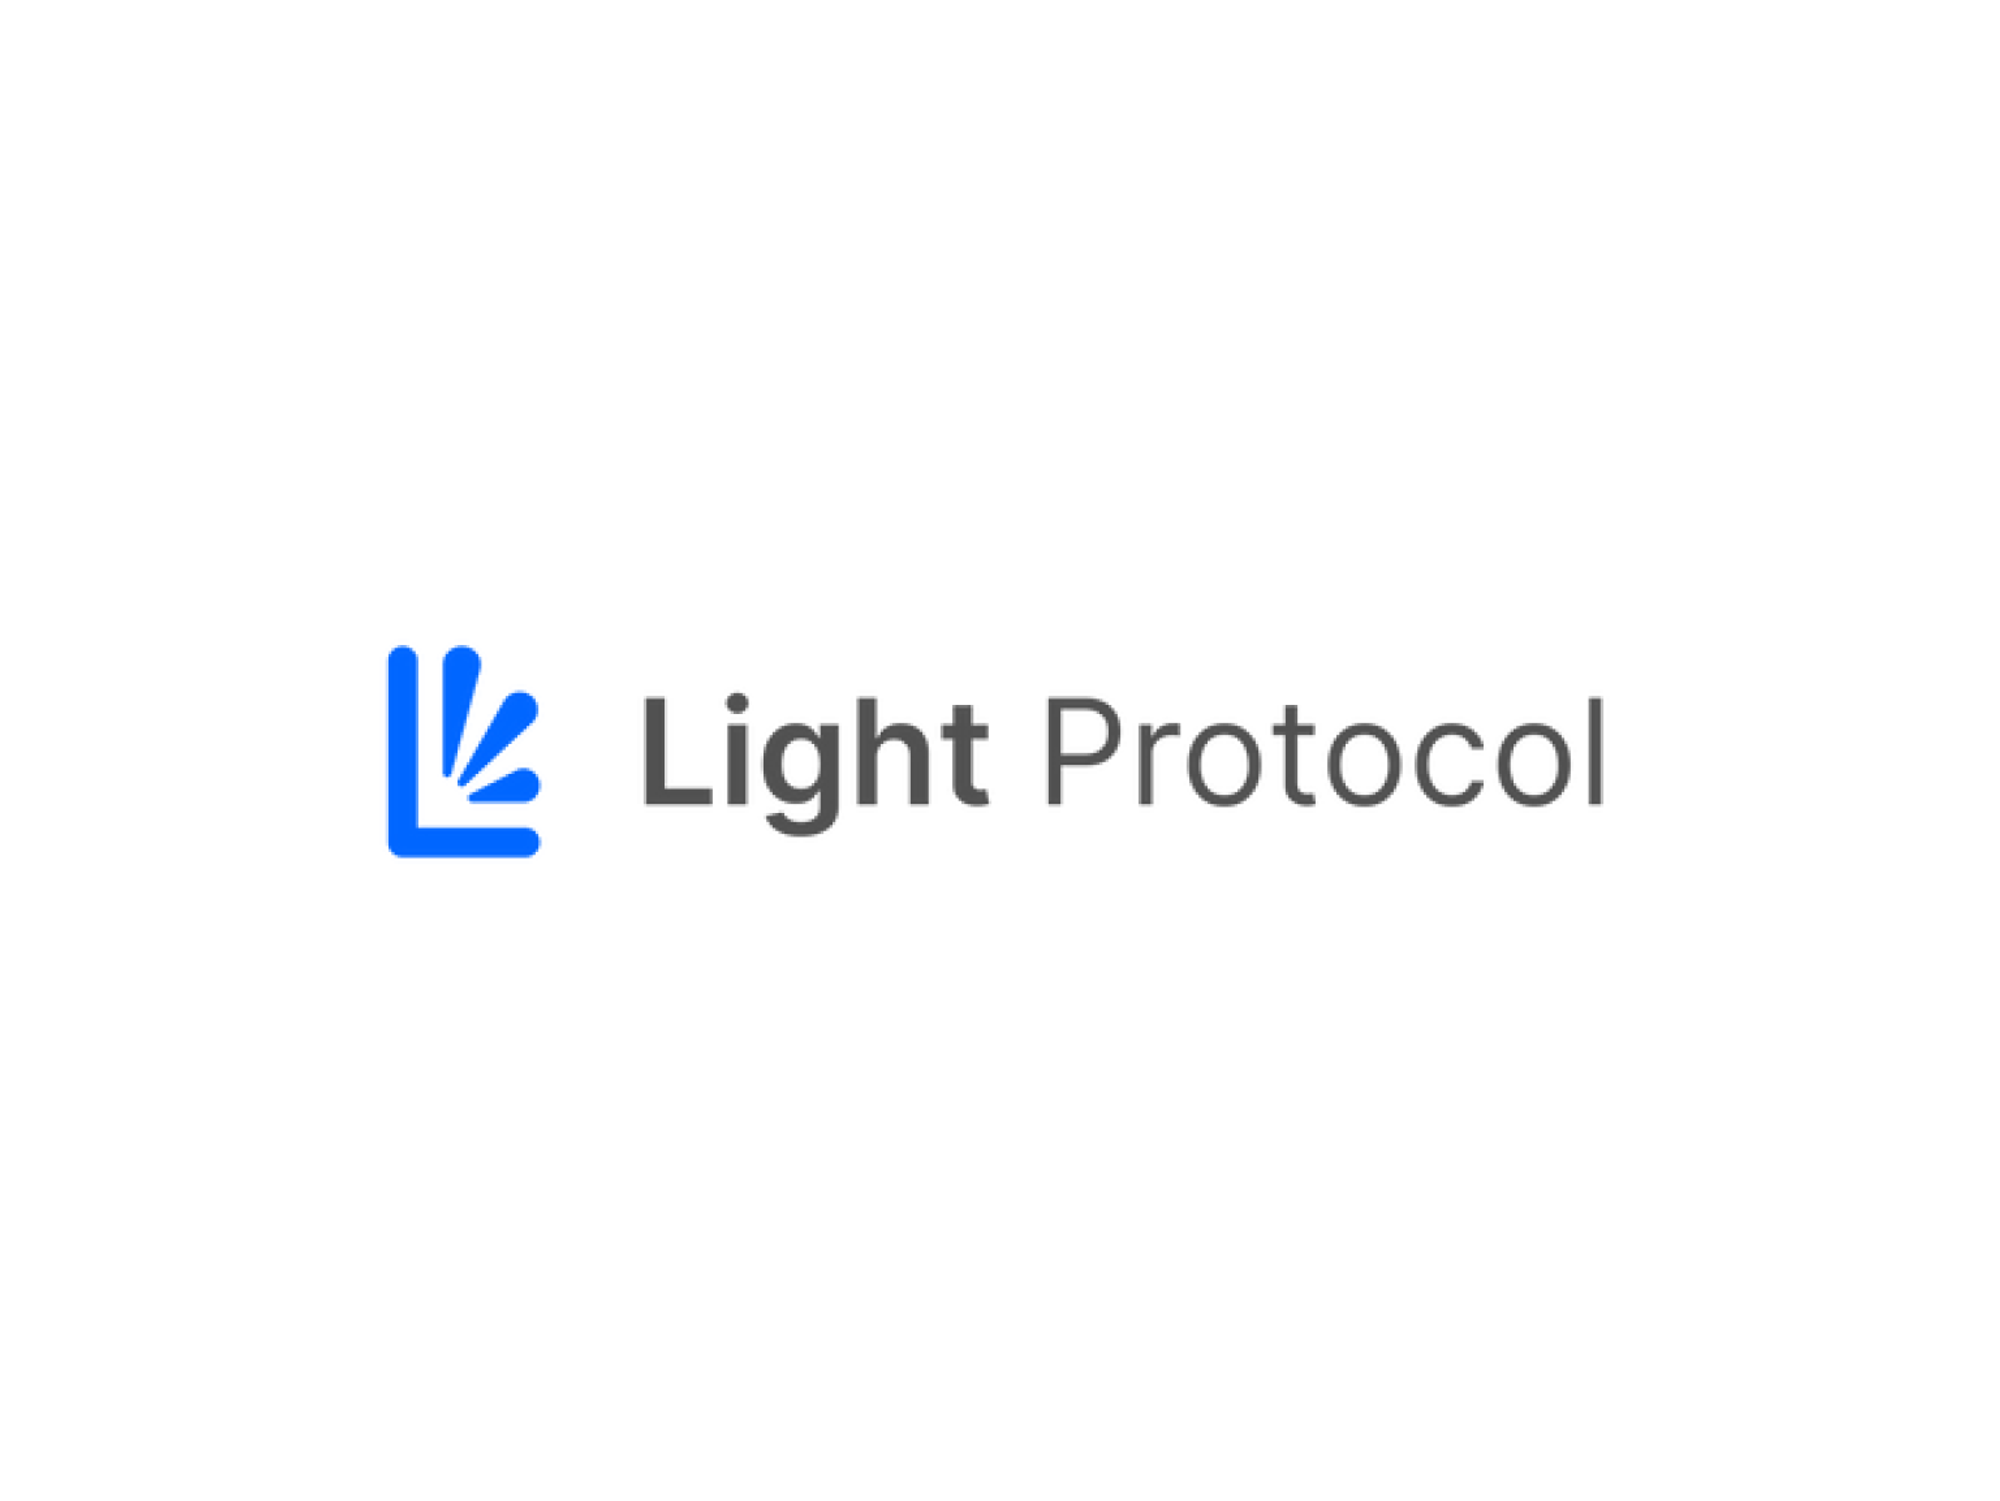 Light Protocol